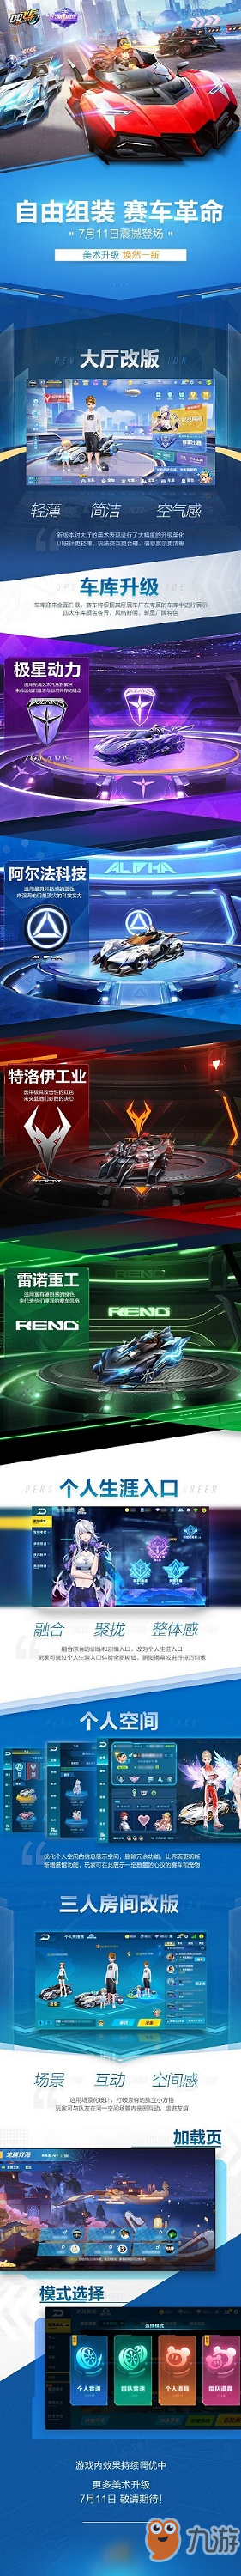 QQ飞车手游新版本美术升级有什么变化 QQ飞车手游新版本更新爆料